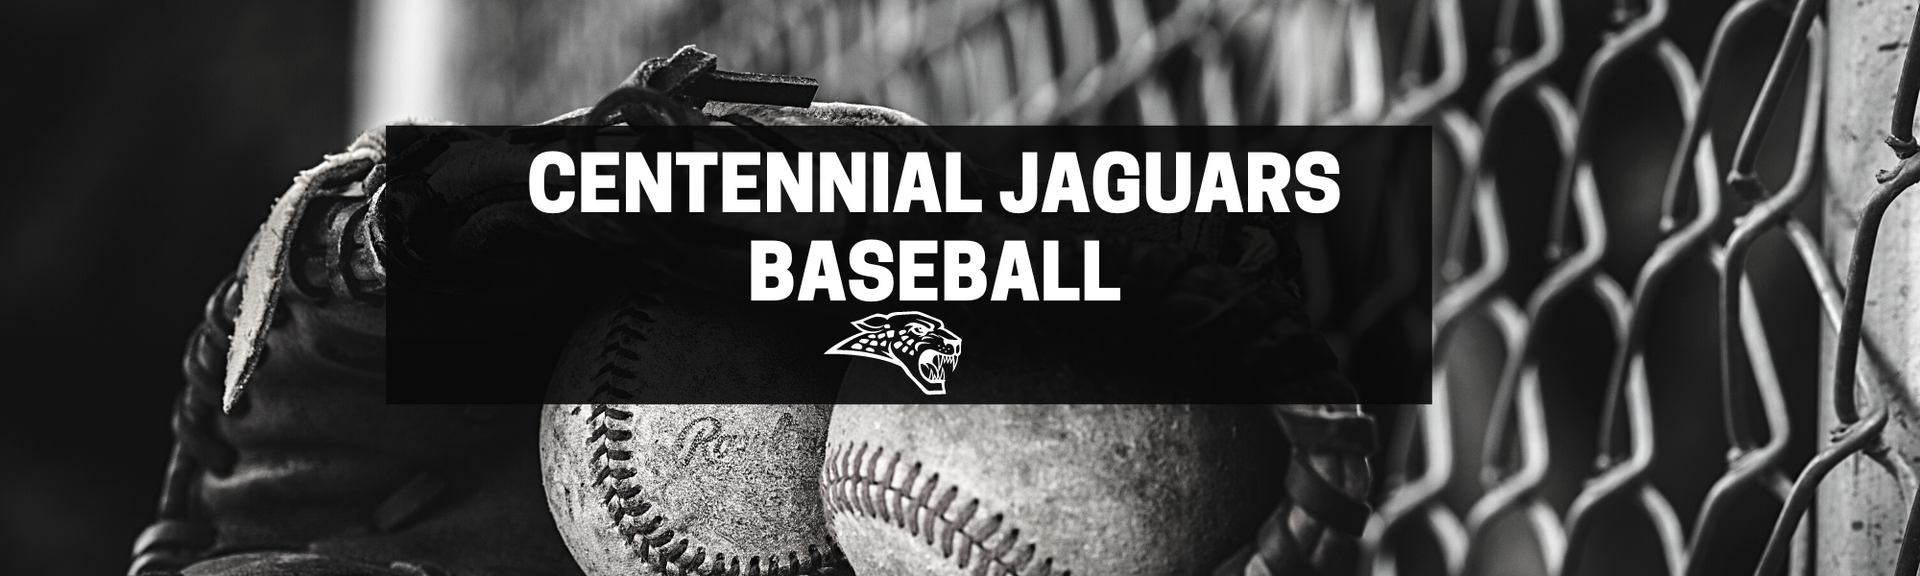 Centennial Jaguar Baseball Collection